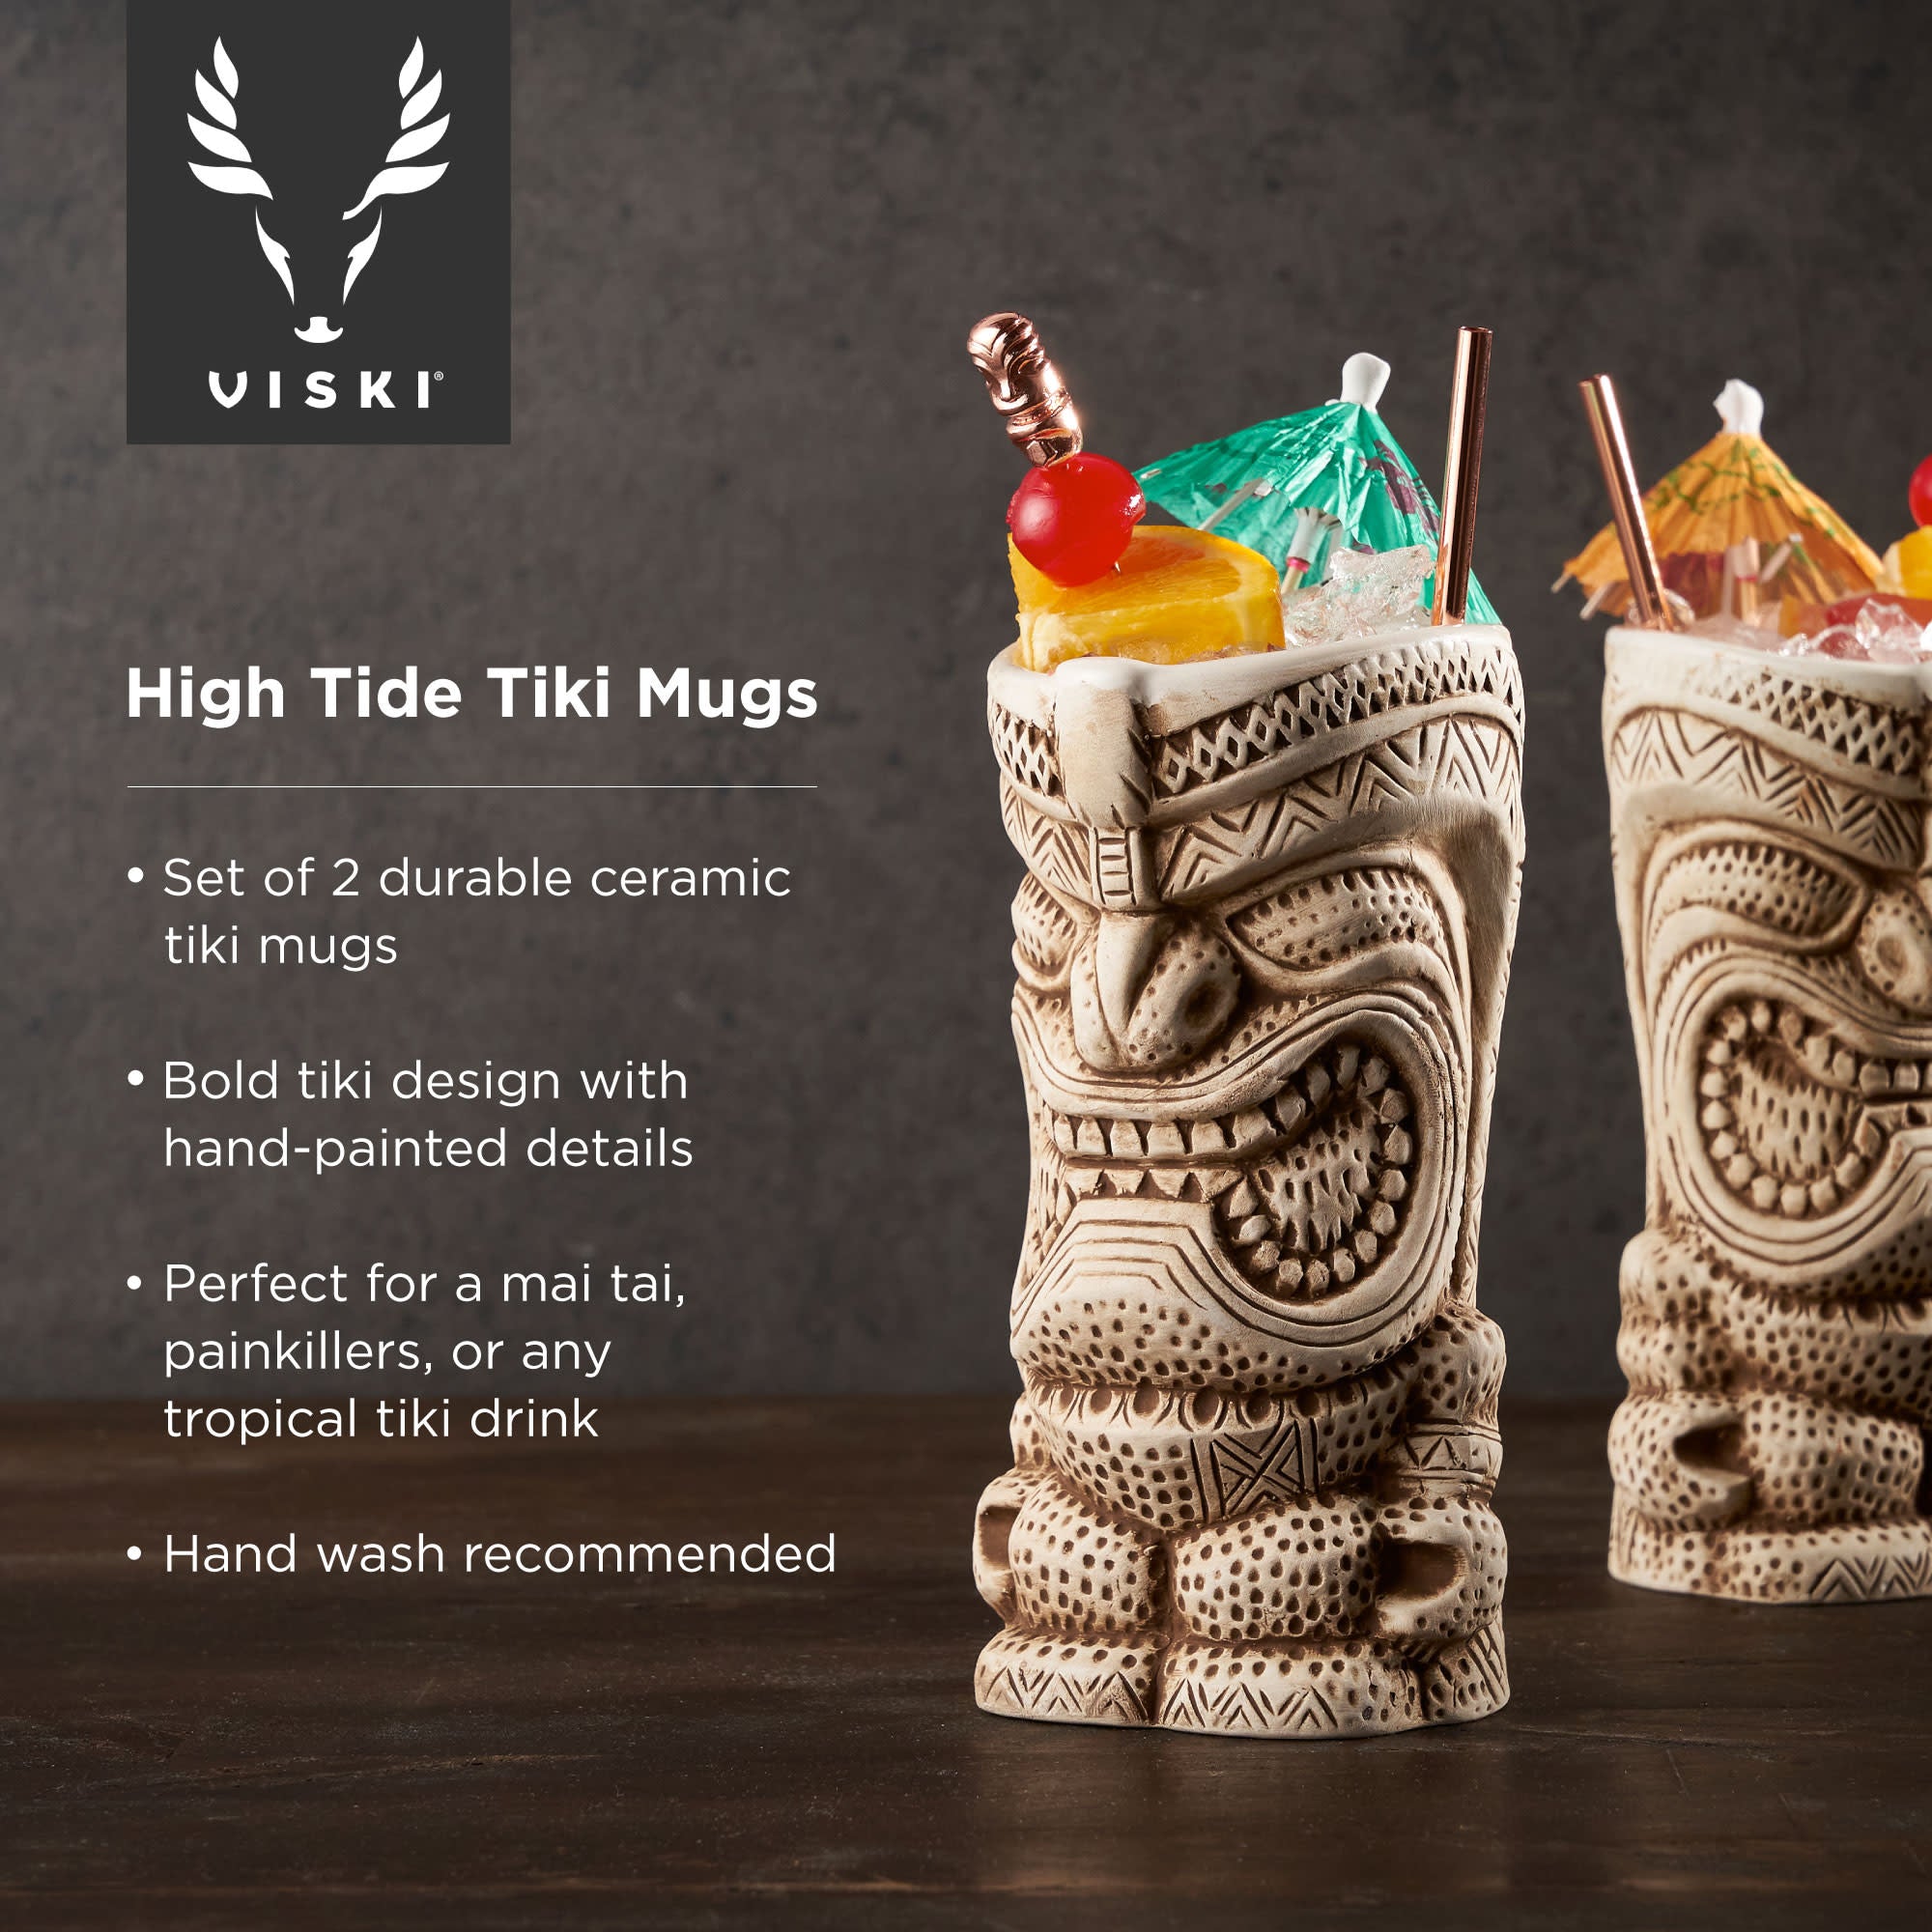 High Tide Tiki Mugs by Viski (11136)